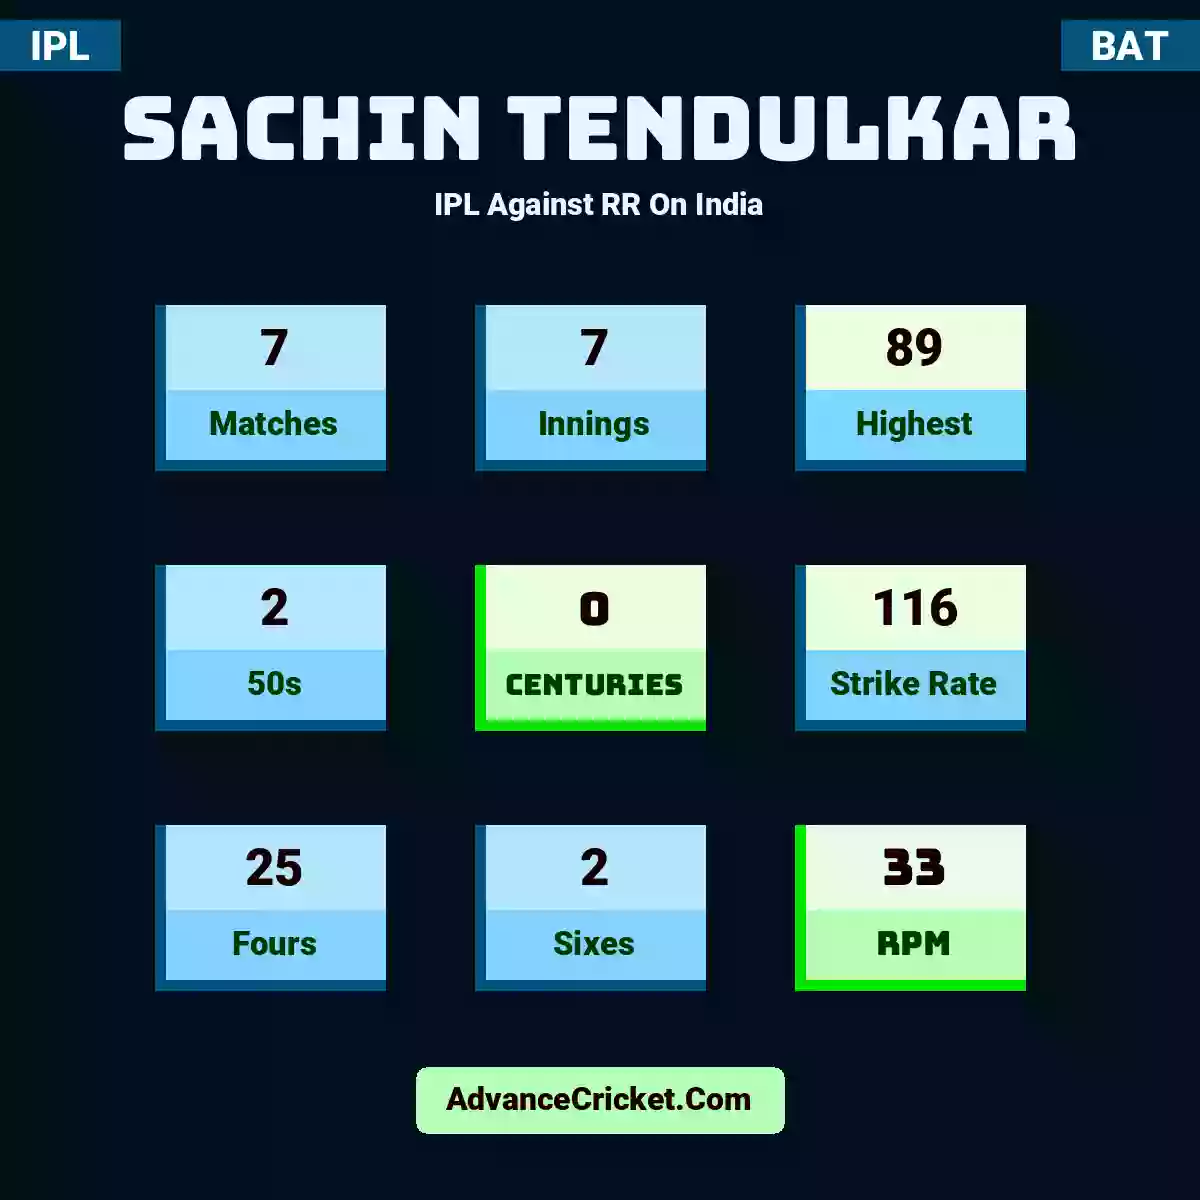 Sachin Tendulkar IPL  Against RR On India, Sachin Tendulkar played 7 matches, scored 89 runs as highest, 2 half-centuries, and 0 centuries, with a strike rate of 116. S.Tendulkar hit 25 fours and 2 sixes, with an RPM of 33.